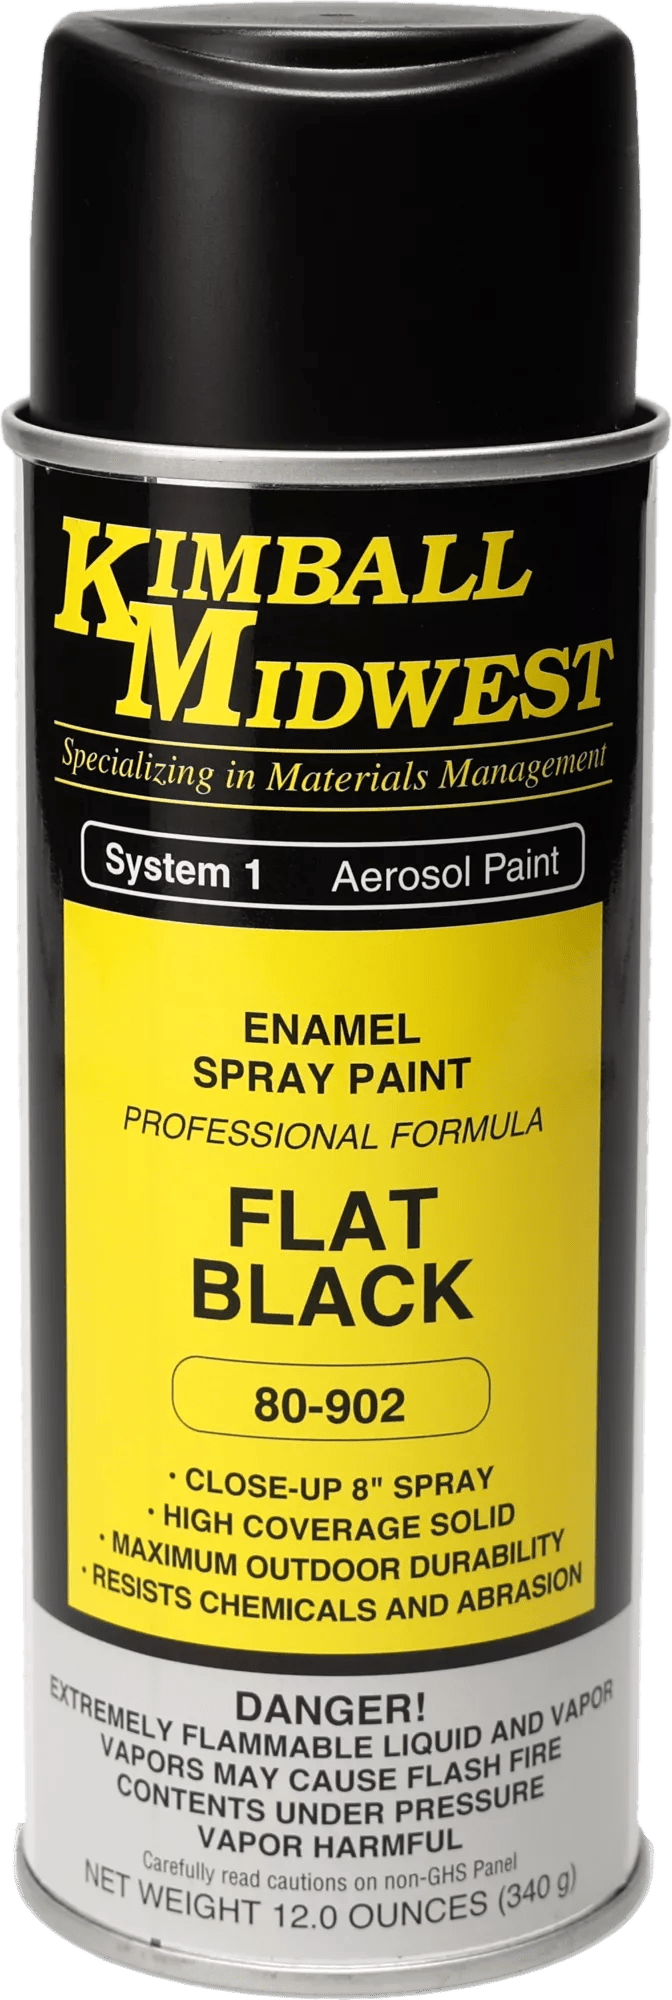 Flat Black All-Purpose Enamel Spray Paint - 16 oz. Can